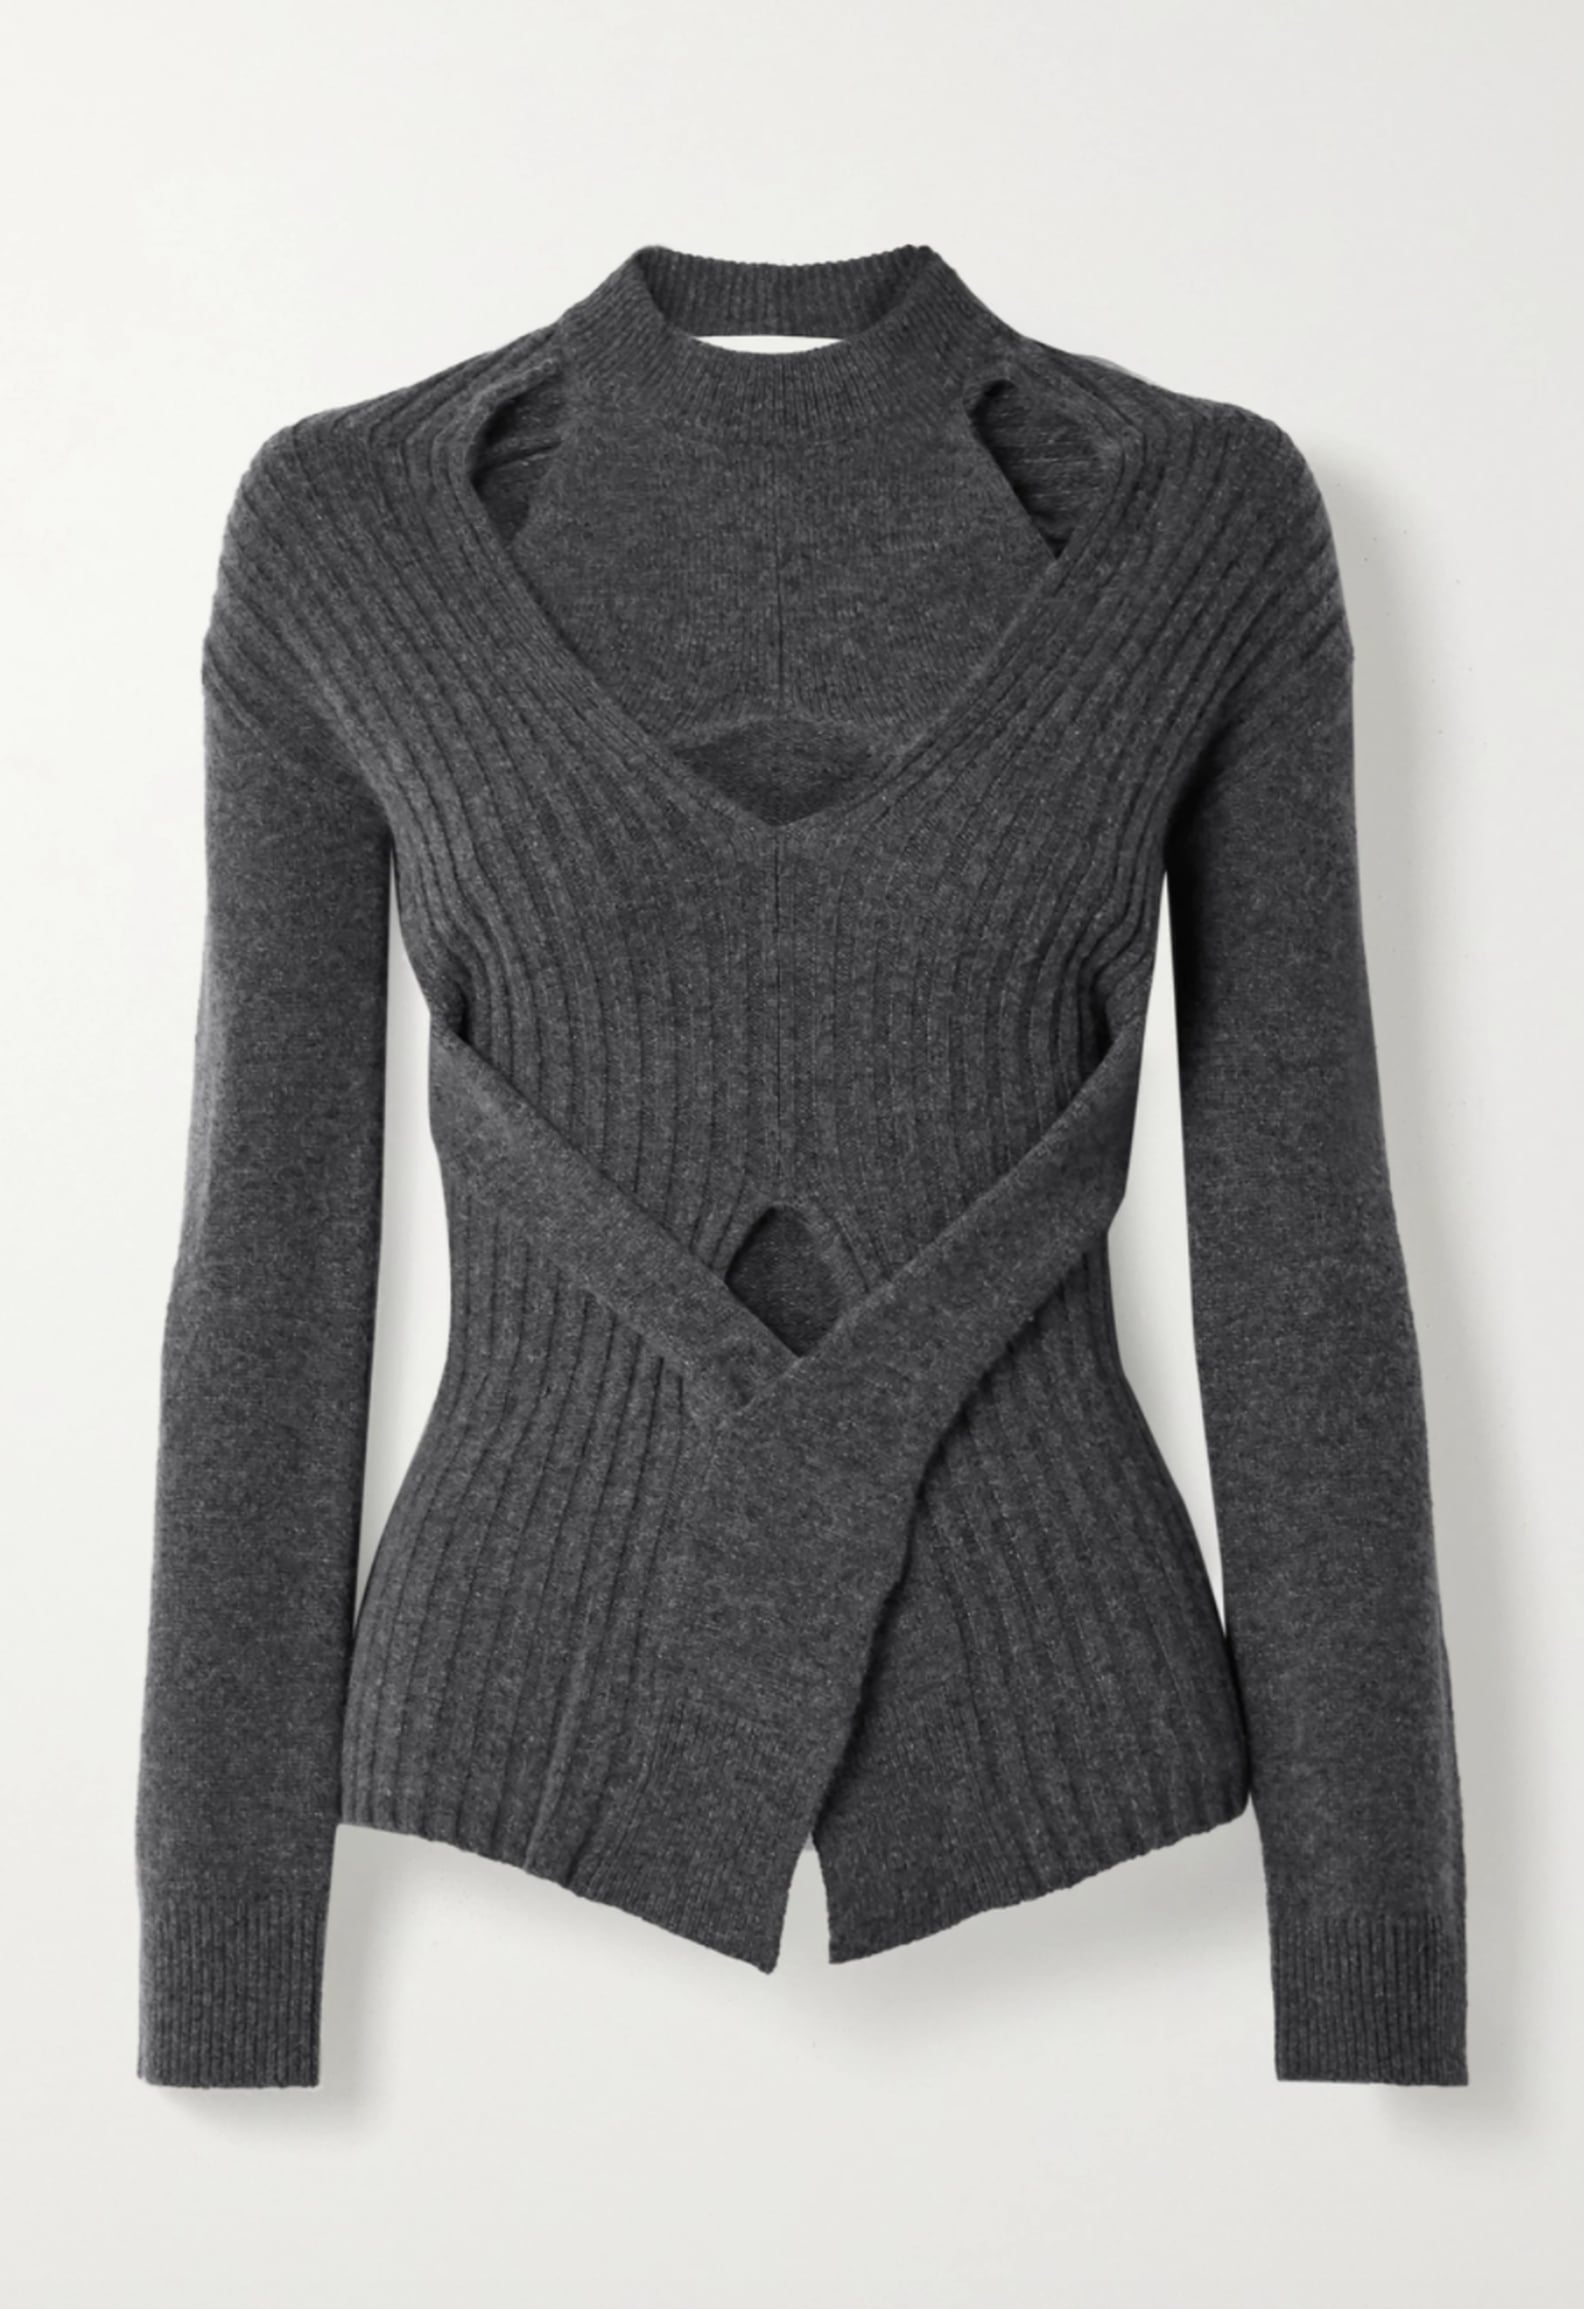 Sweater Trends For Fall 2020 | POPSUGAR Fashion